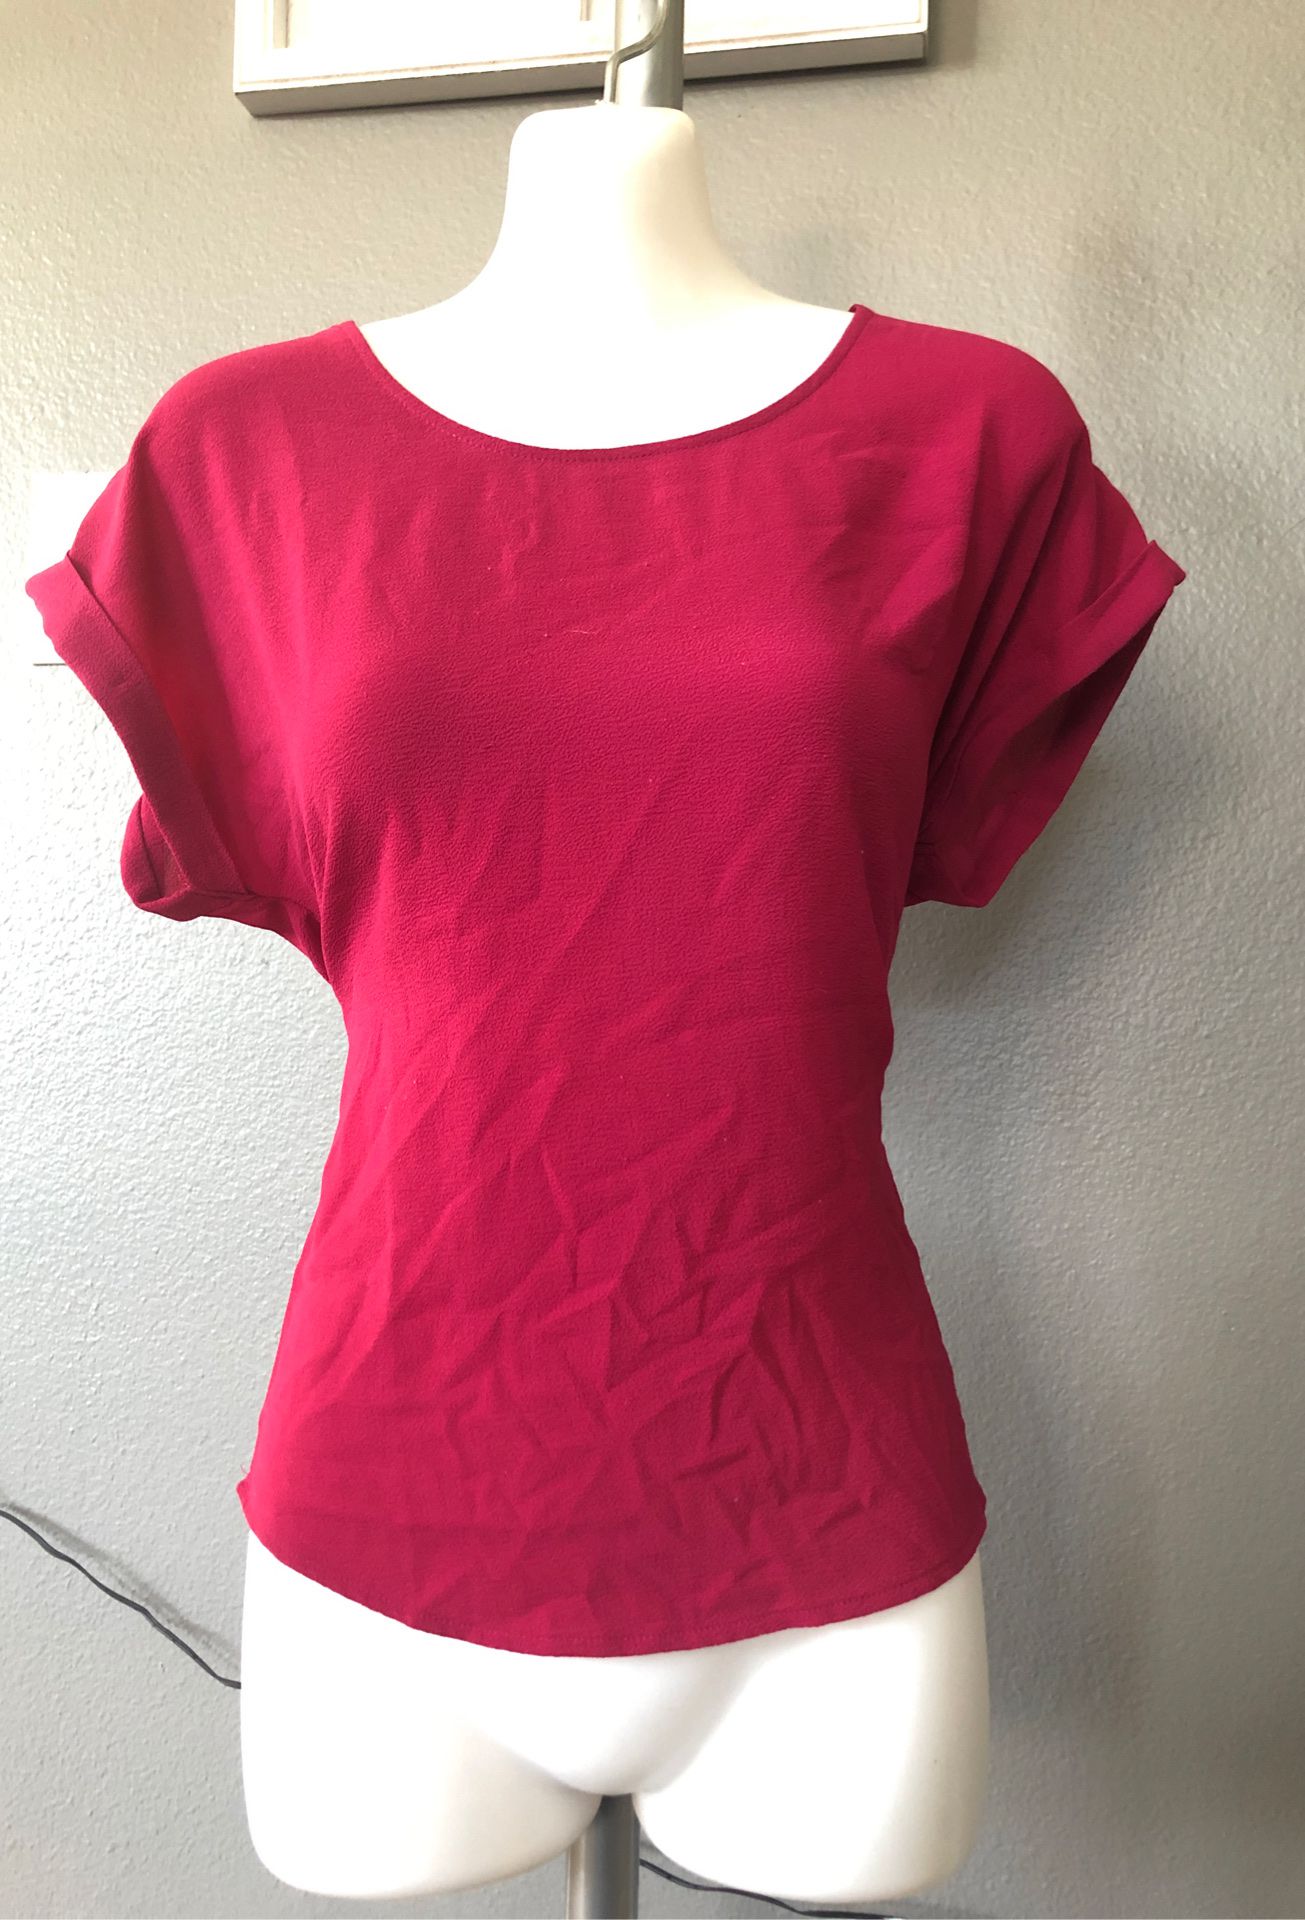 Hot Pink Short Sleeve Shirt Size Small